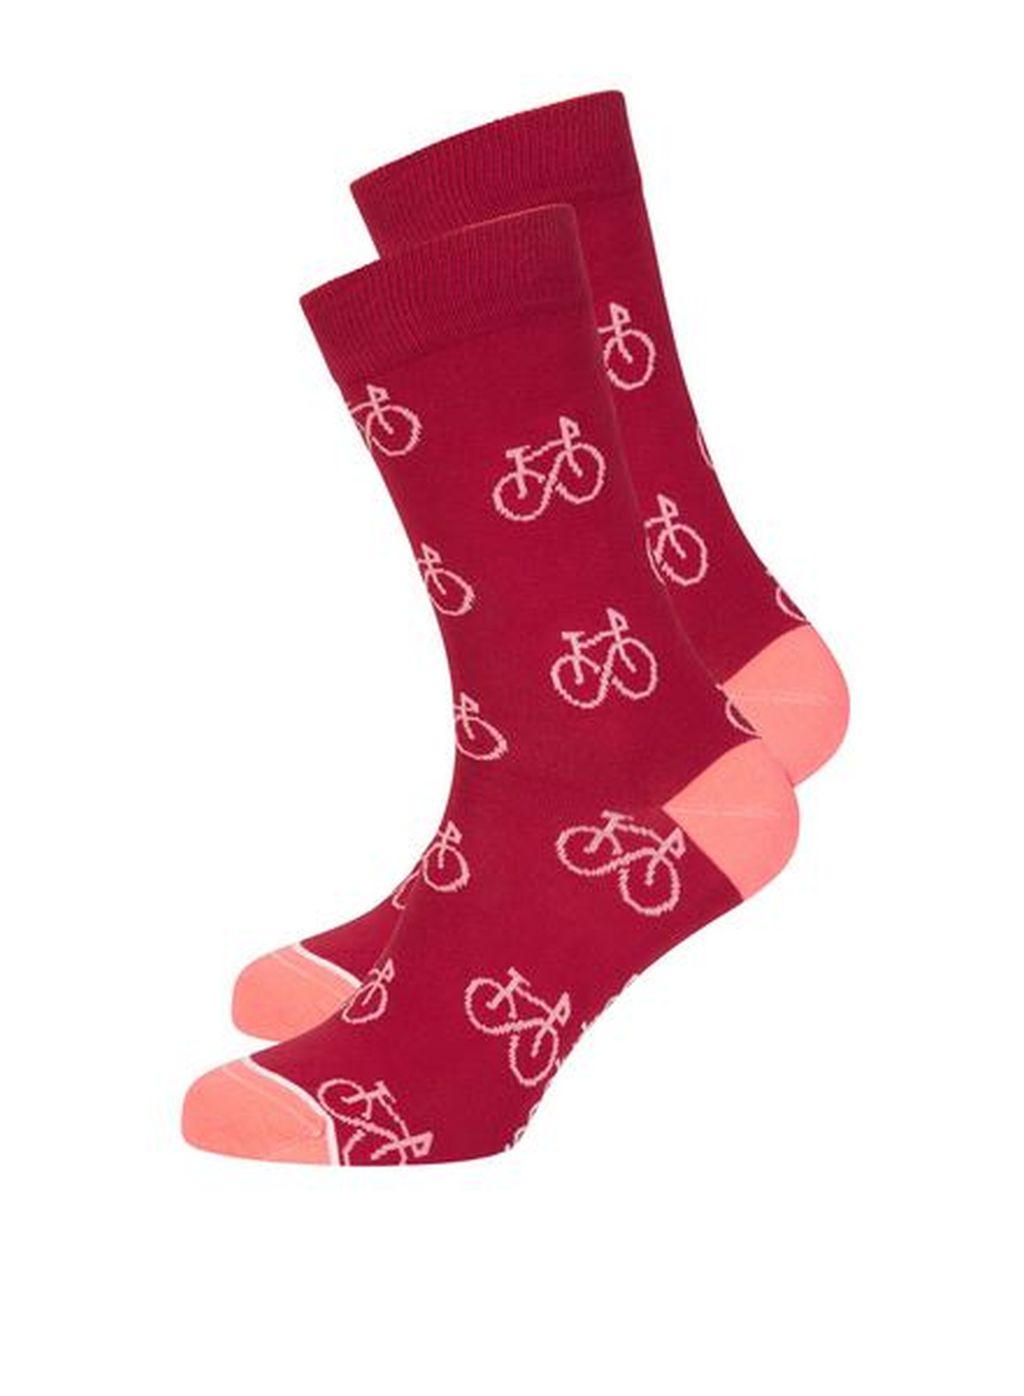 Basic Socks #BIKE dark red/coral 35-38